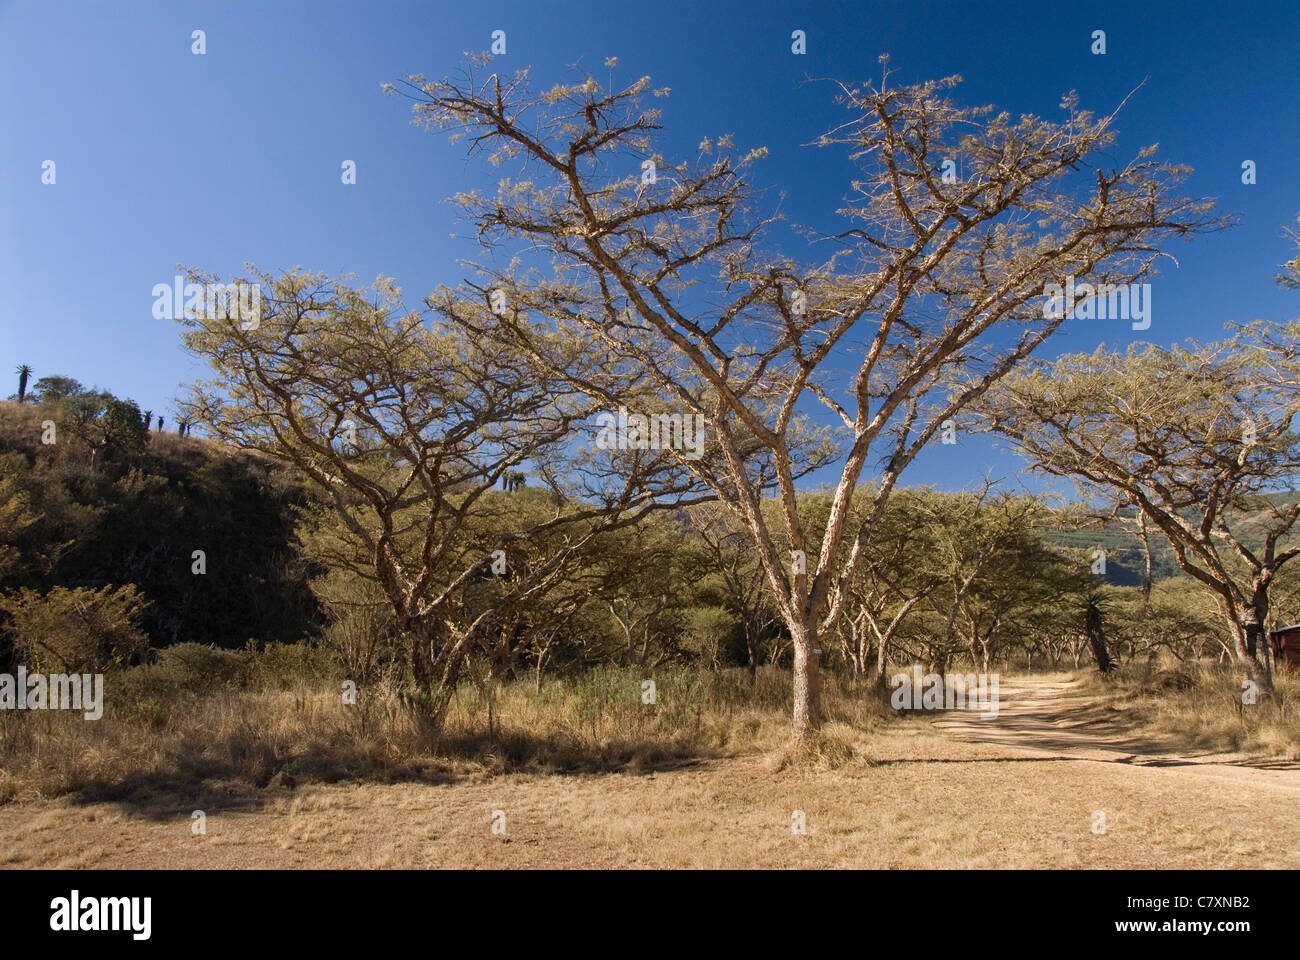 Cumberland Nature Reserve, near Pietermaritzburg, Kwa-Zulu Natal, South Africa. Avenue of Paperbark thorn trees. Stock Photo